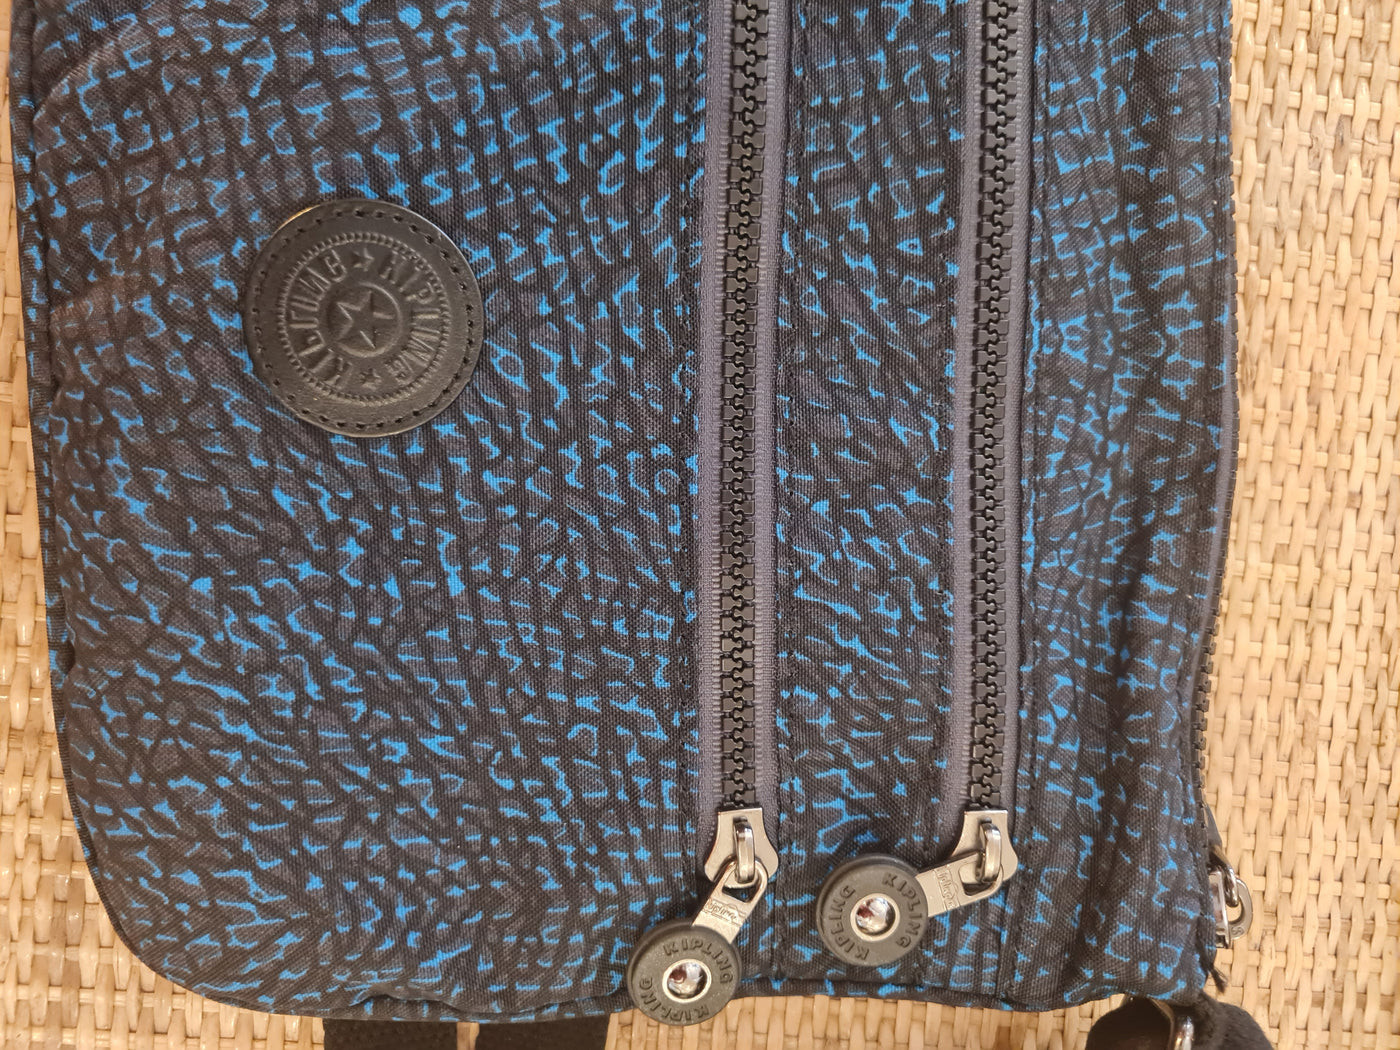 Kipling blue mini Alvar NEW & purse